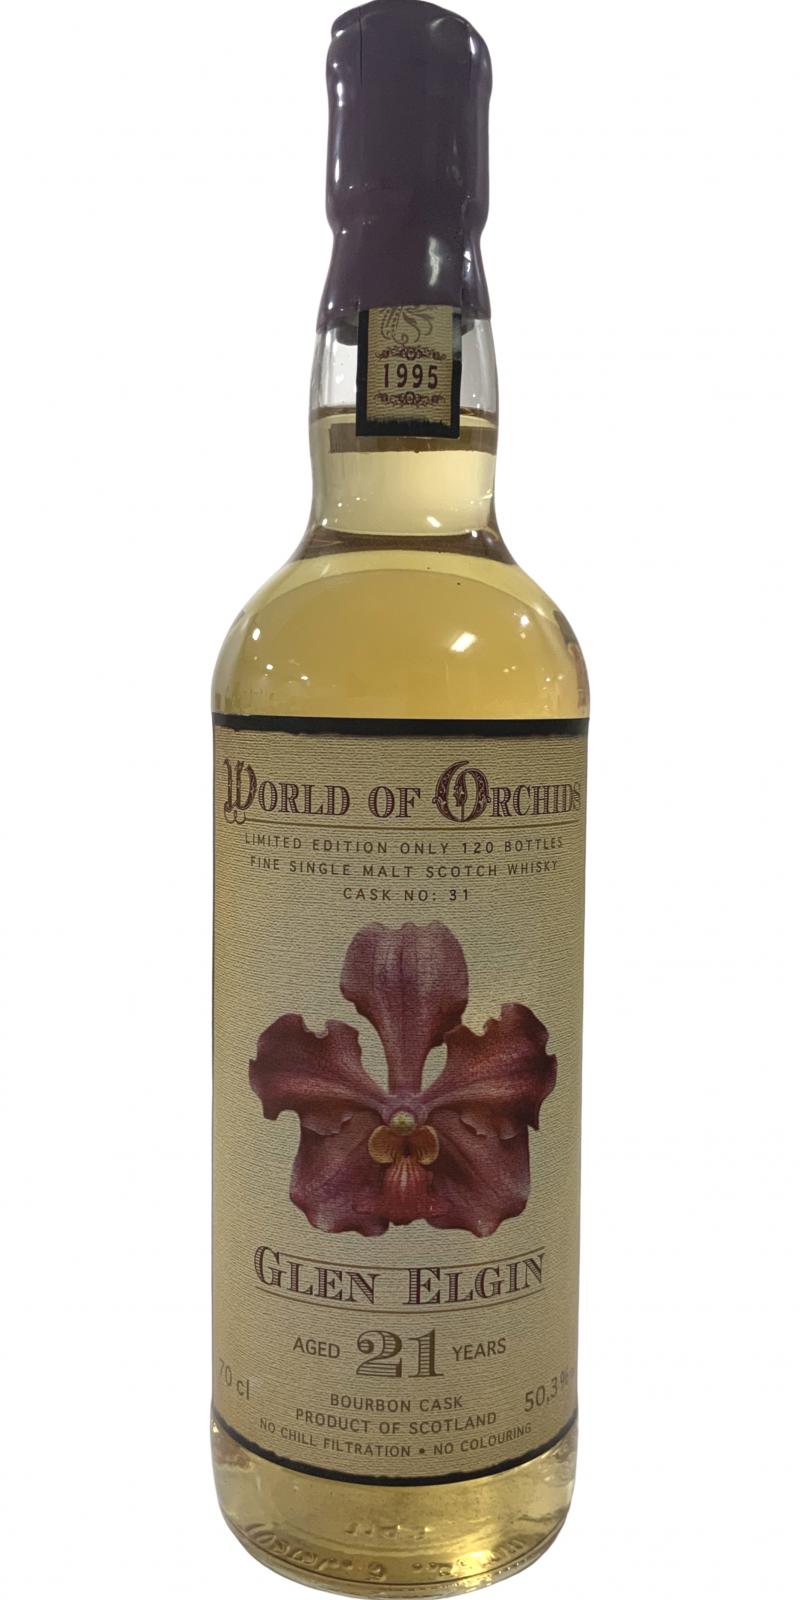 Glen Elgin 1995 JW World of Orchids Bourbon Cask #31 Hauptstross 100 50.3% 700ml